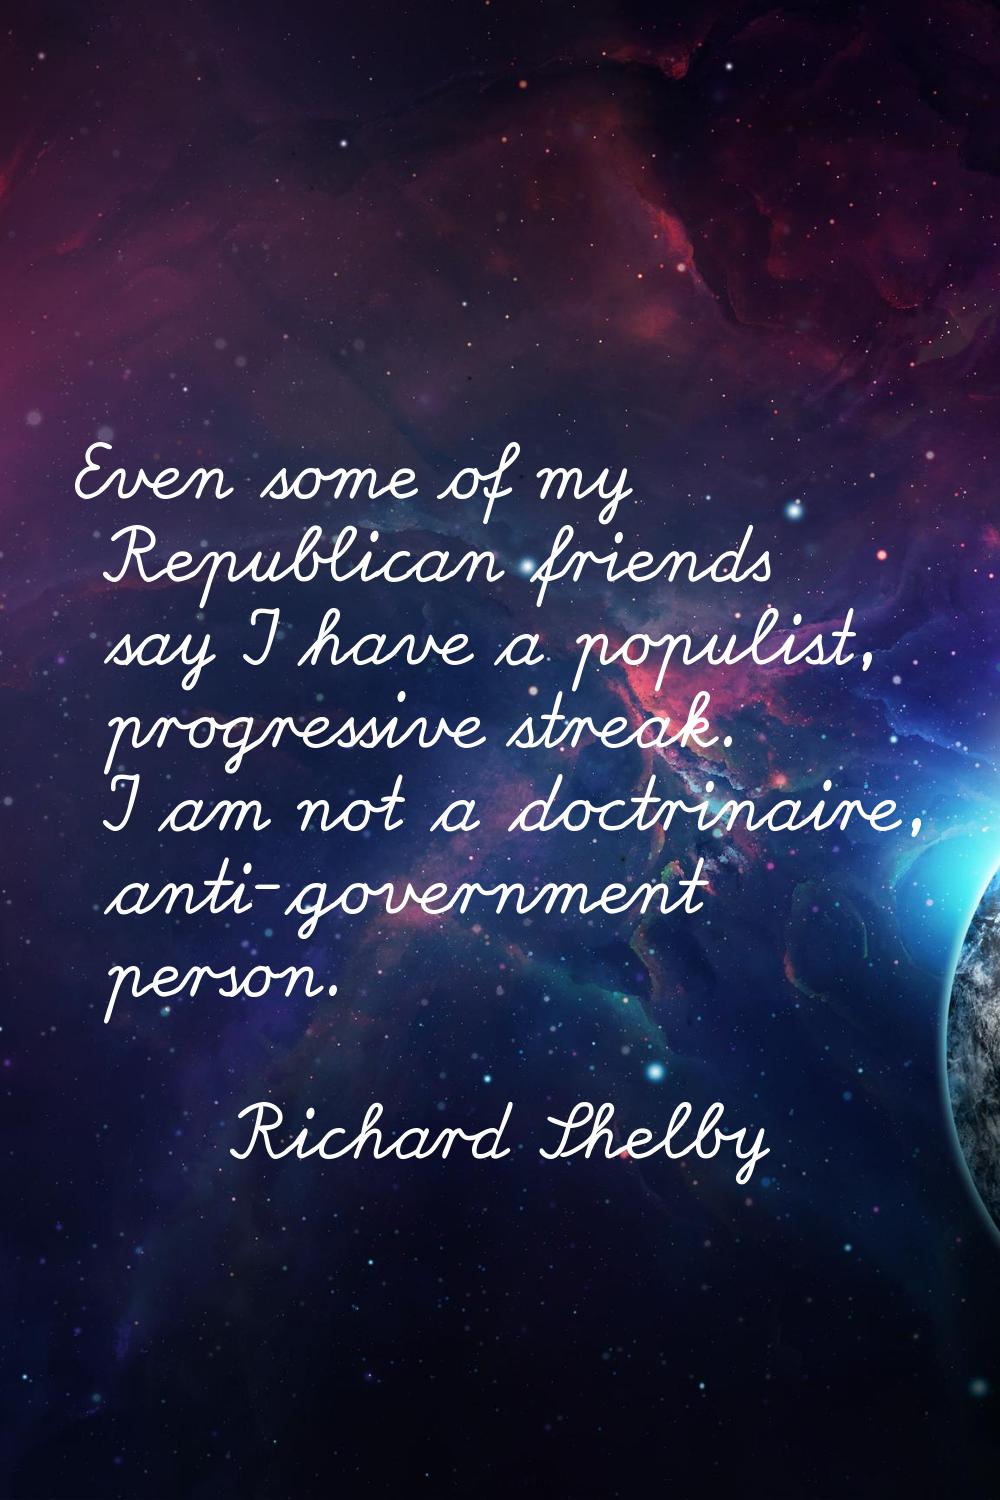 Even some of my Republican friends say I have a populist, progressive streak. I am not a doctrinair